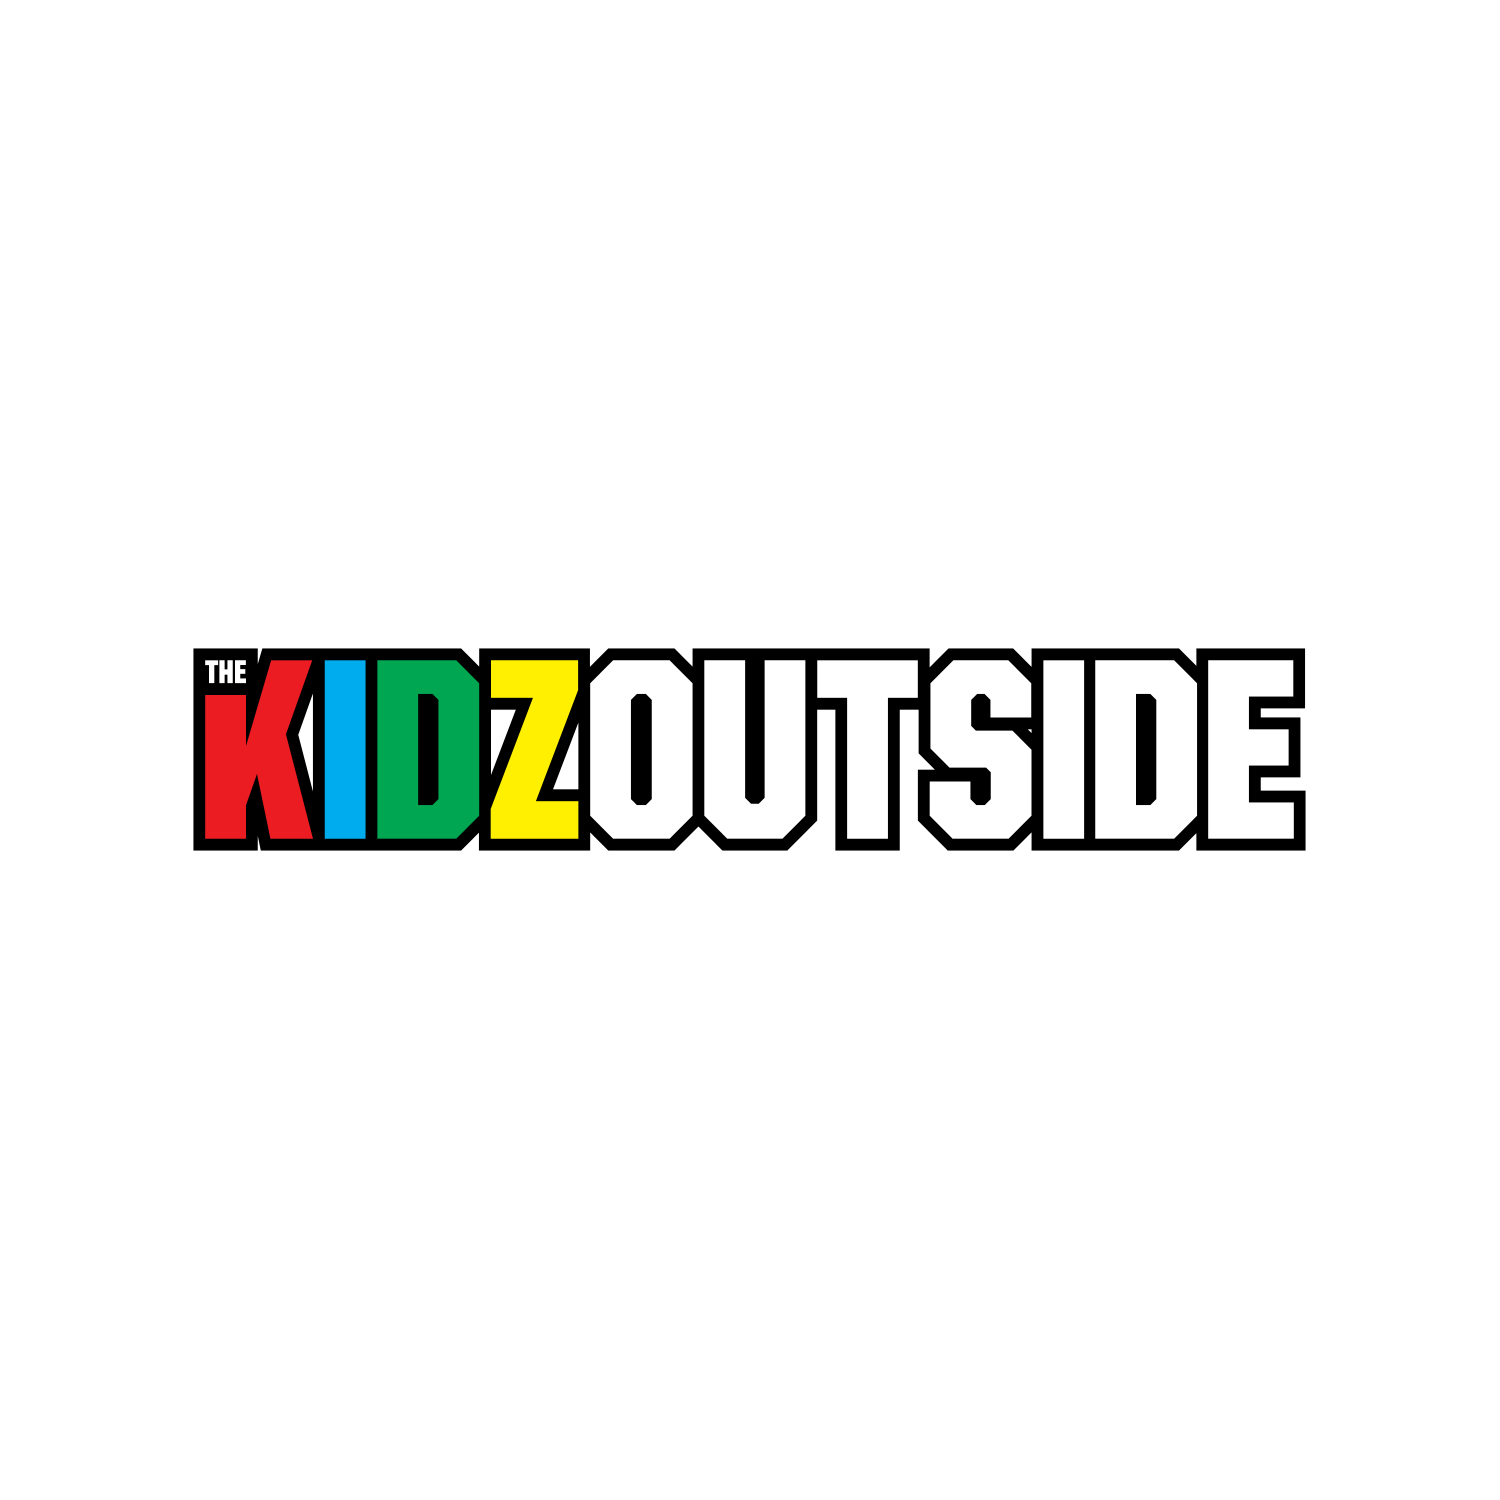 The Kidz Outside